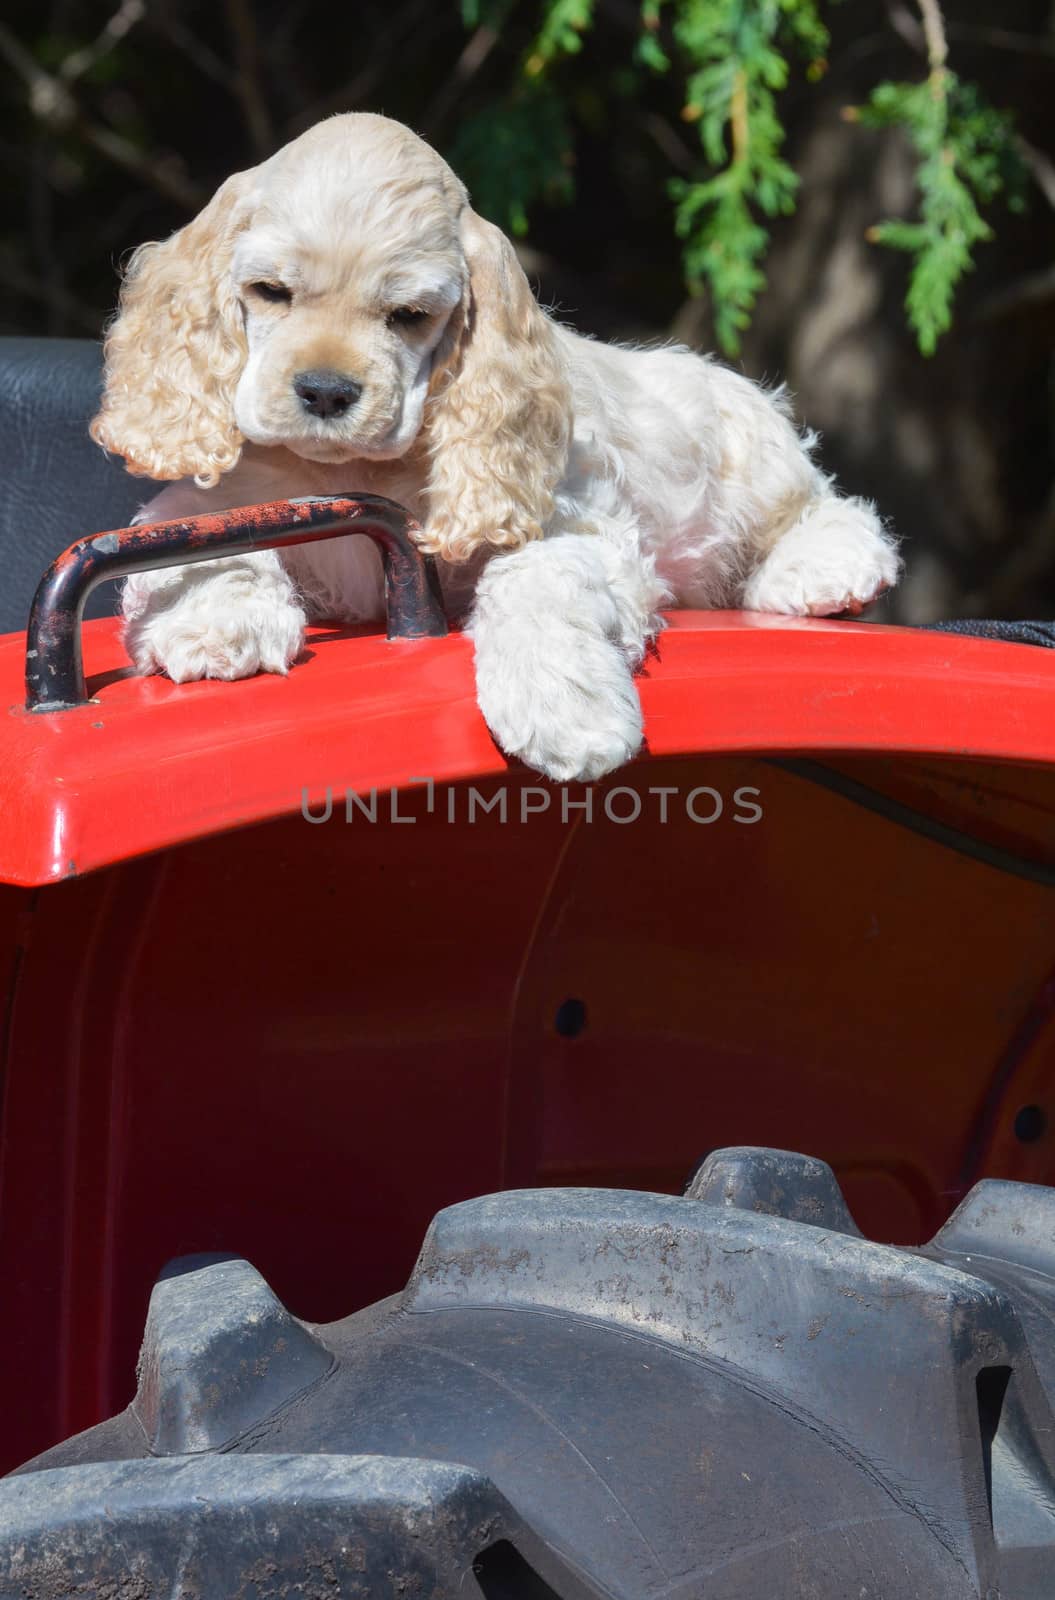 farm dog - cocker spaniel puppy laying on fender of a tractor